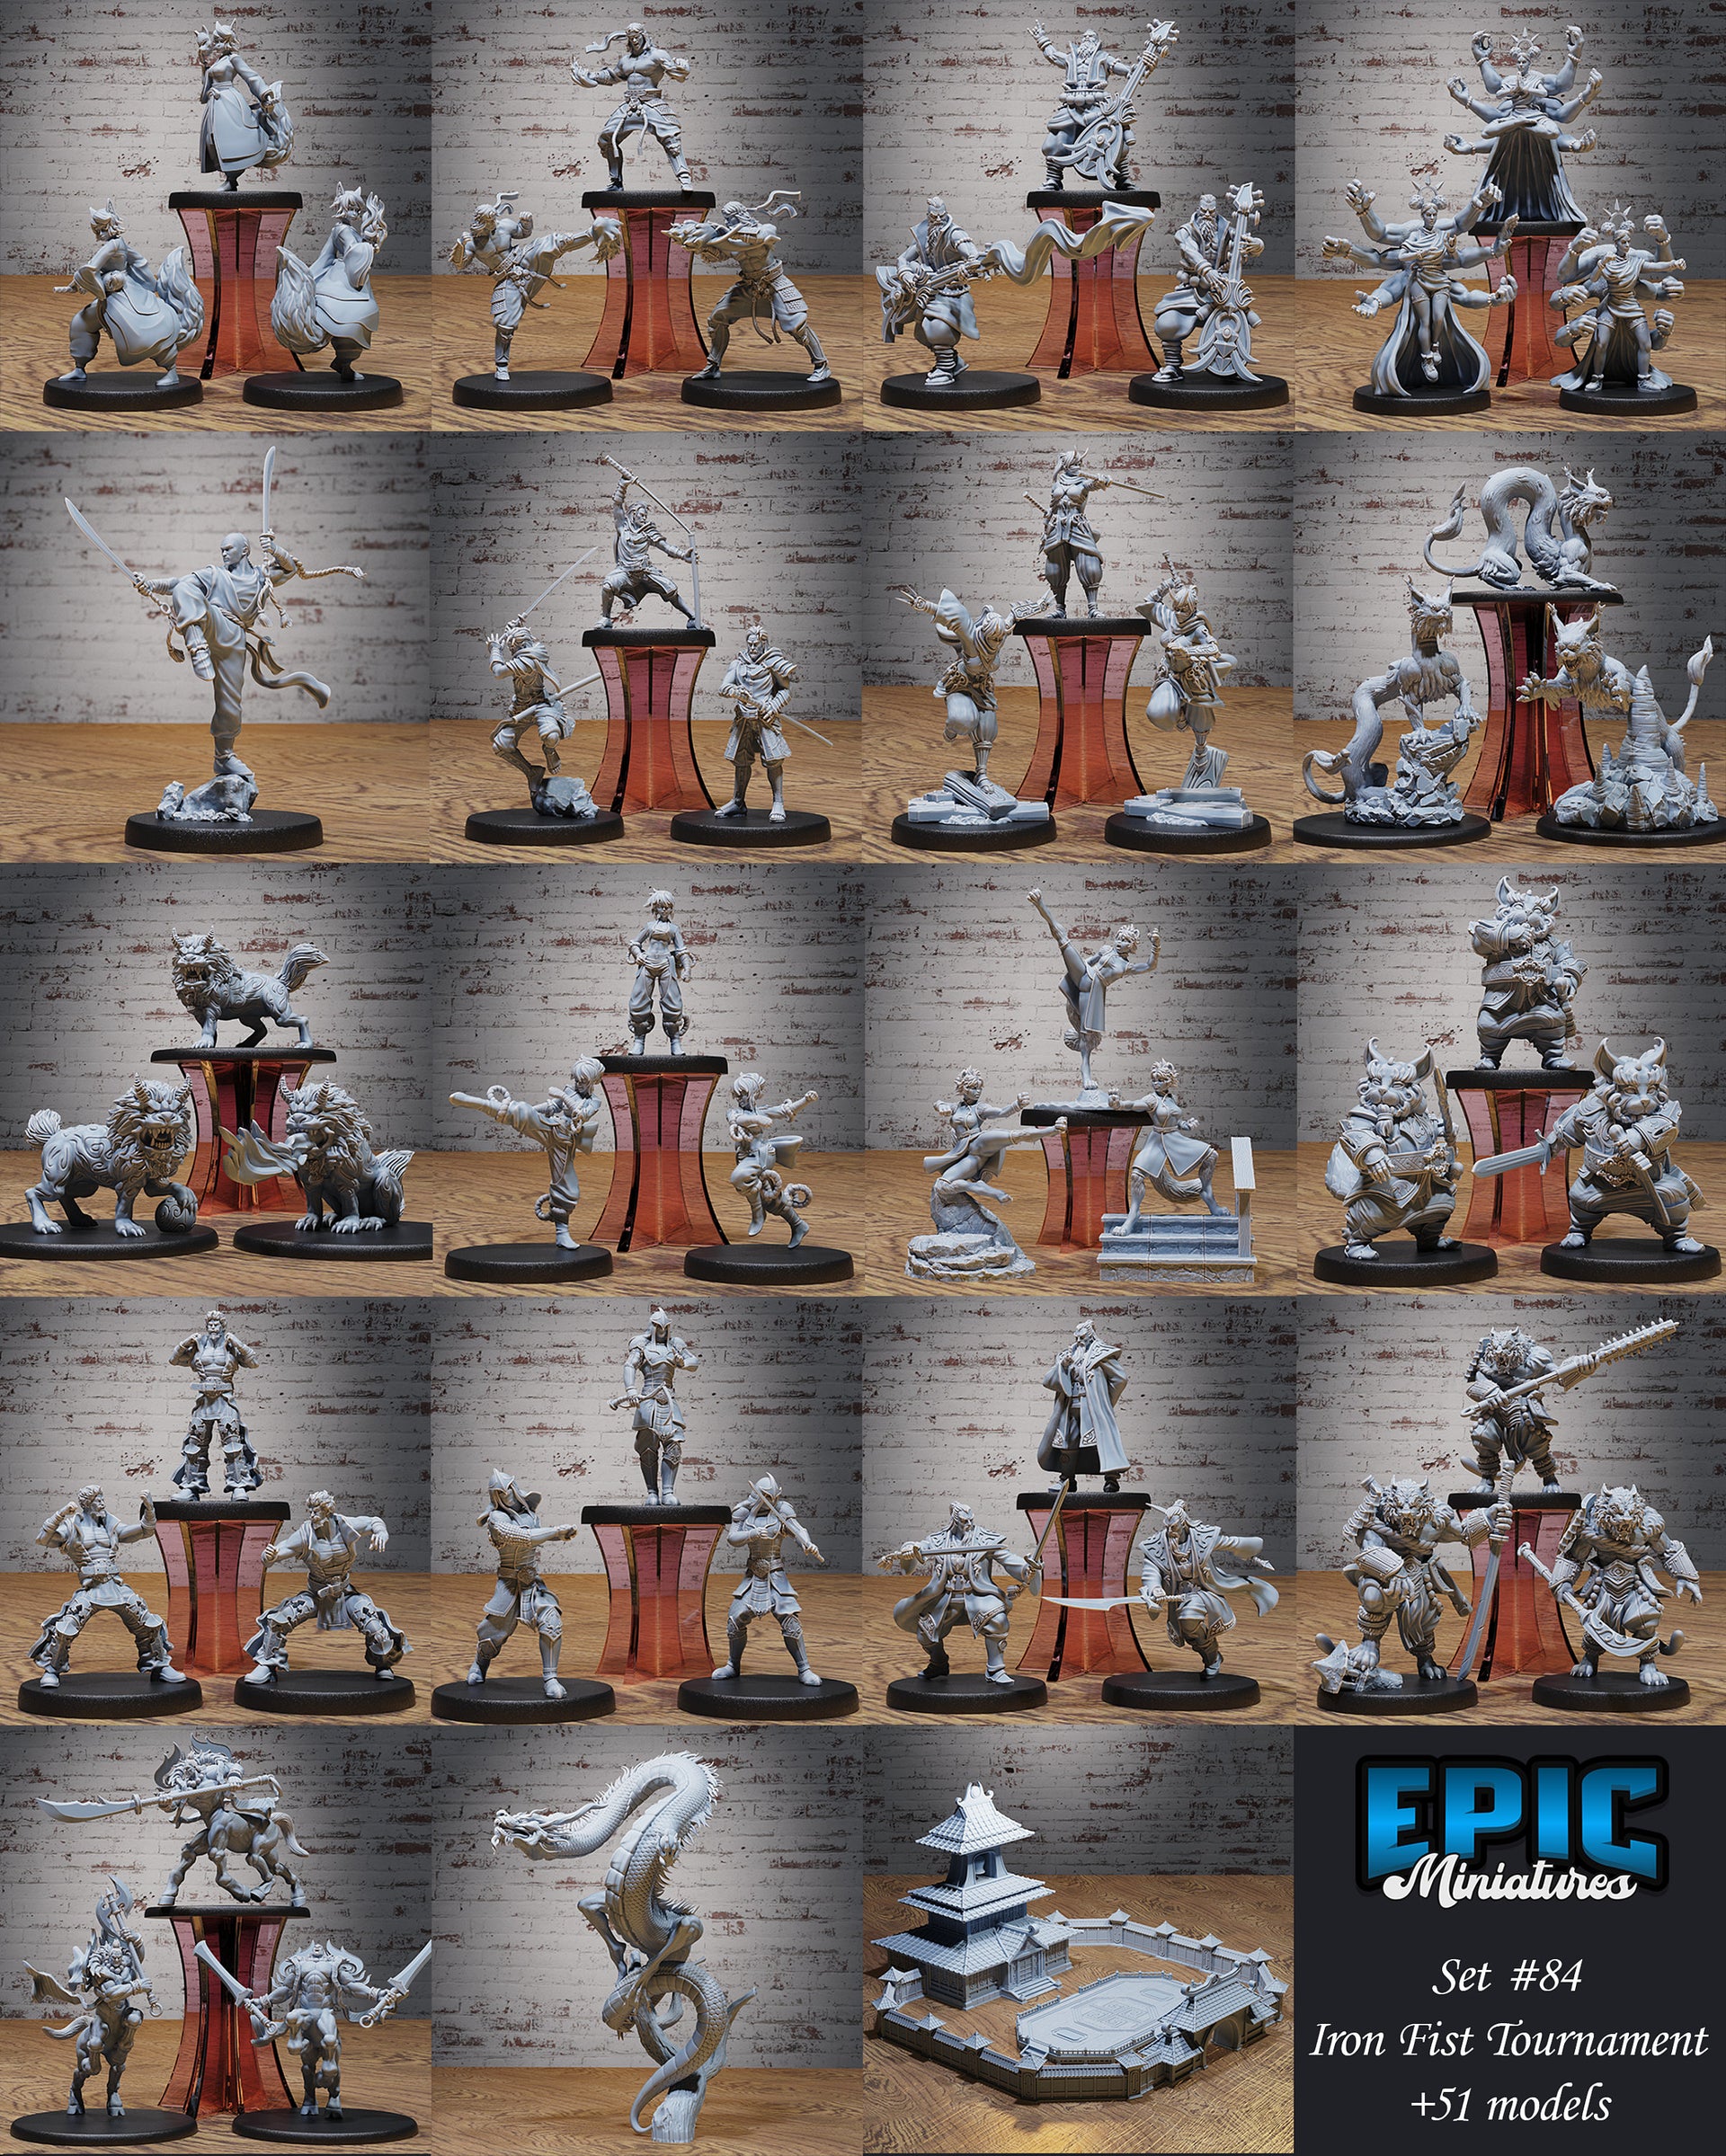 Mythical With Dragon - Epic Miniatures | Ninth Age | 32mm |Iron Fist Tournament | Gargantuan | Wyvern | Wyrm